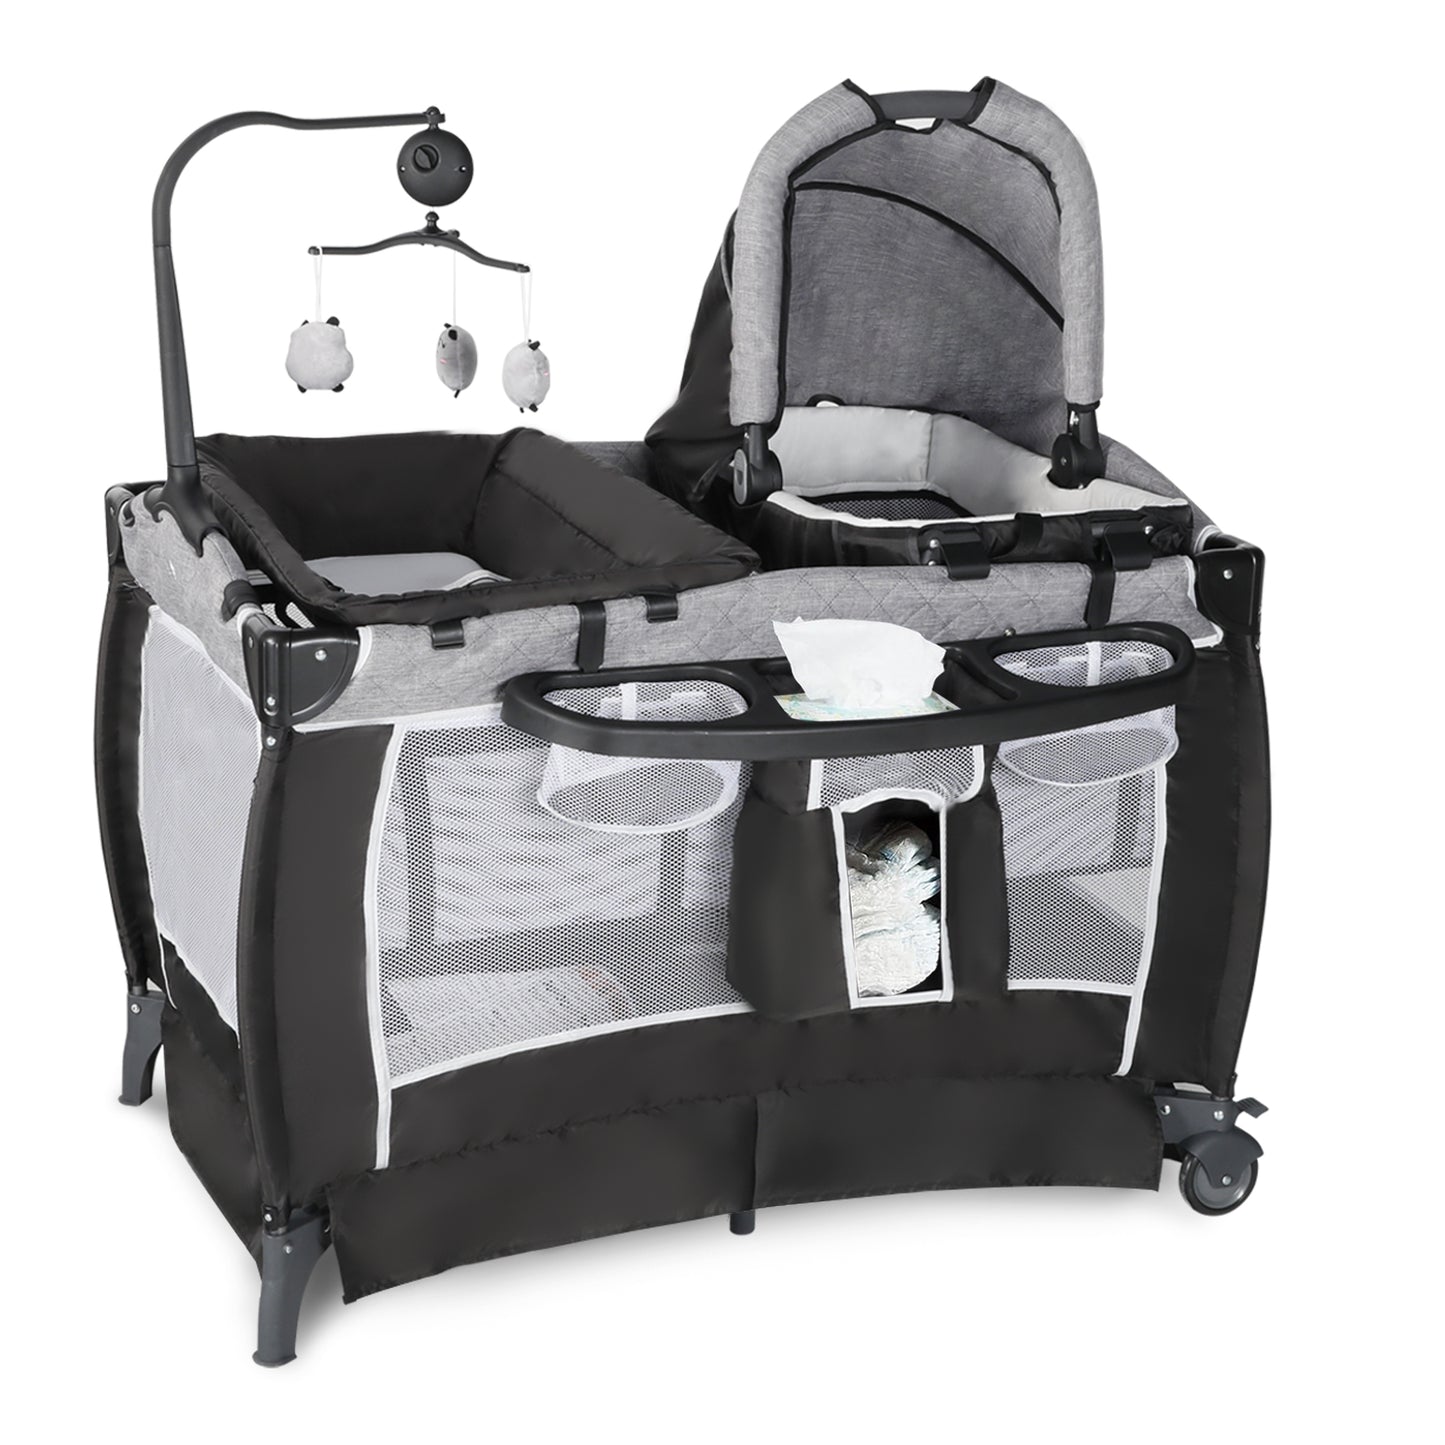 Portable Nursery Center Playard, 5 in 1 Foldable Baby Bassinet & Unisex Crib, 0-36 Months